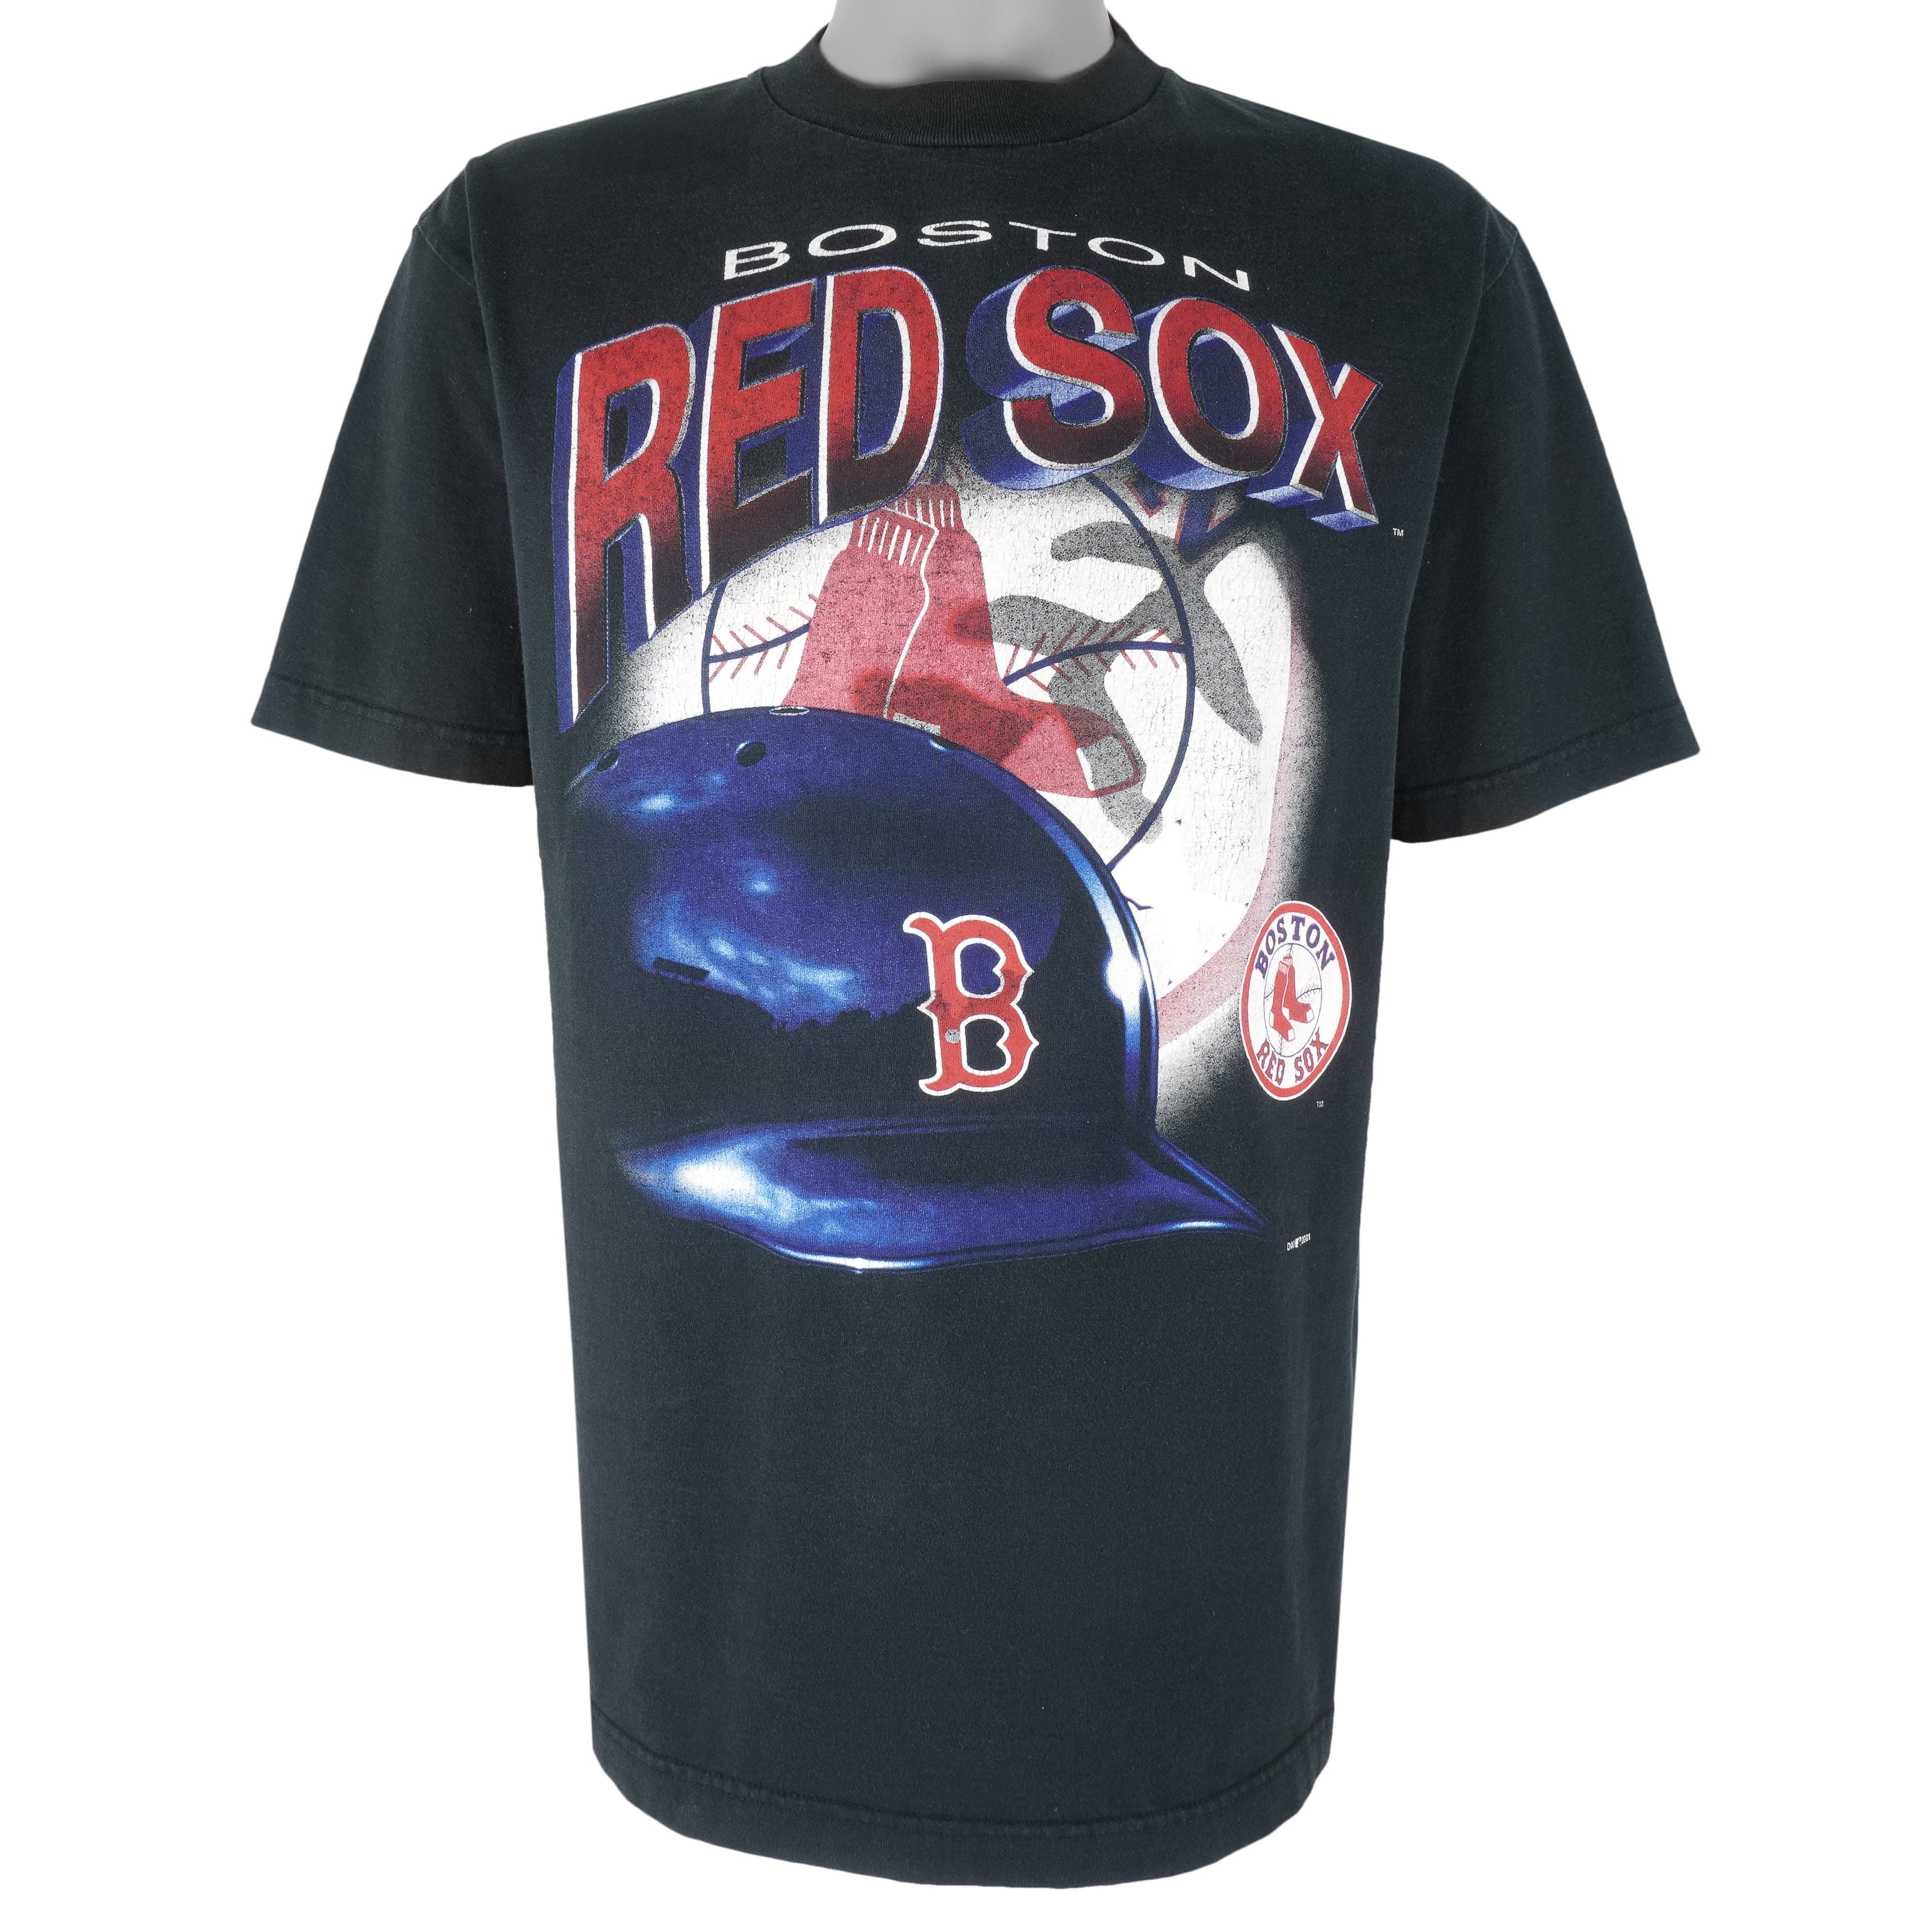 VINTAGE 1991 MADE IN USA BOSTON RED SOX MLB BASEBALL T-SHIRT SZ: M